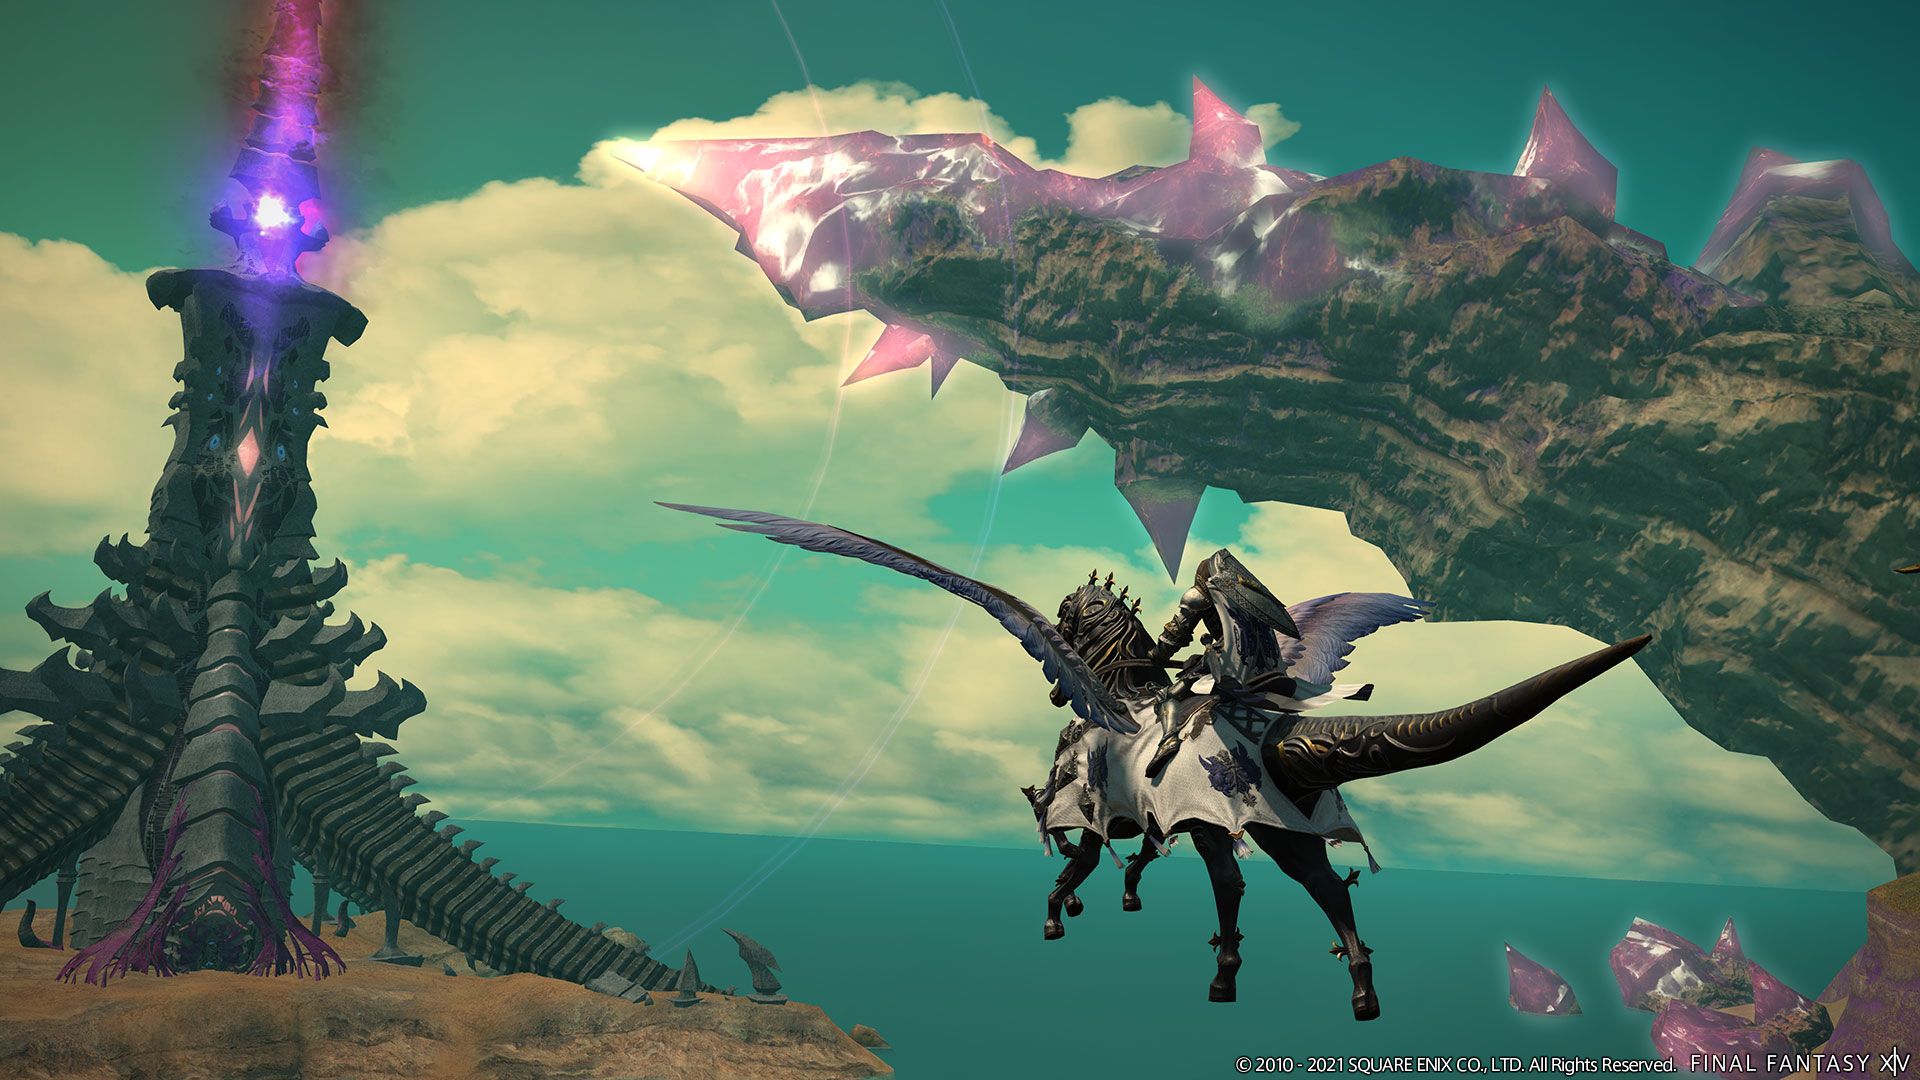 The ominous Tower of Zot looms over Thavnair in Final Fantasy XIV: Endwalker.